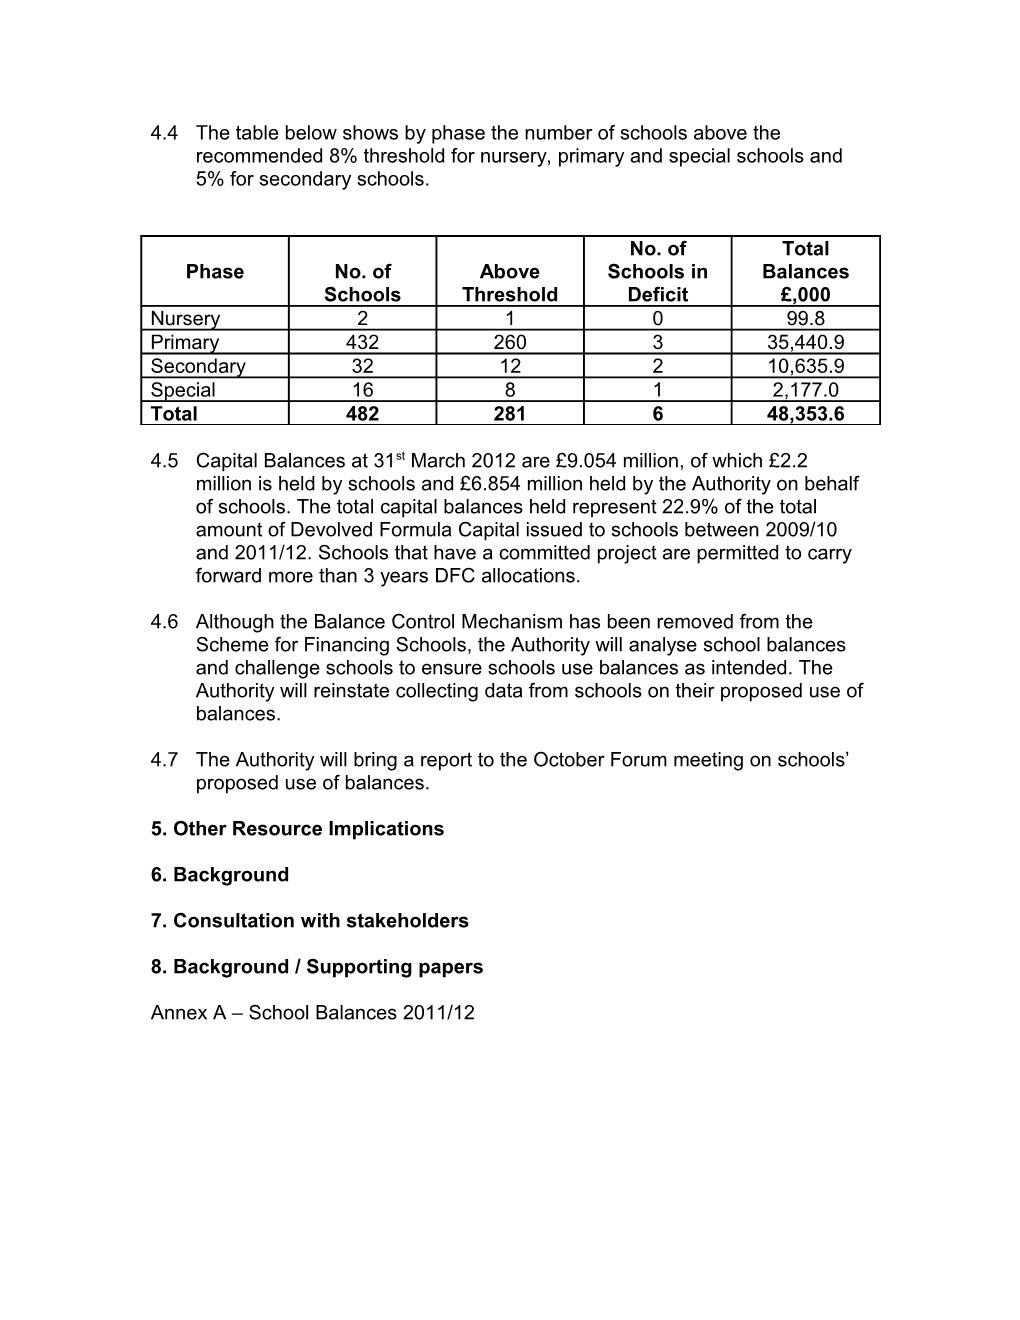 Report Title: 2011/12 School Balances